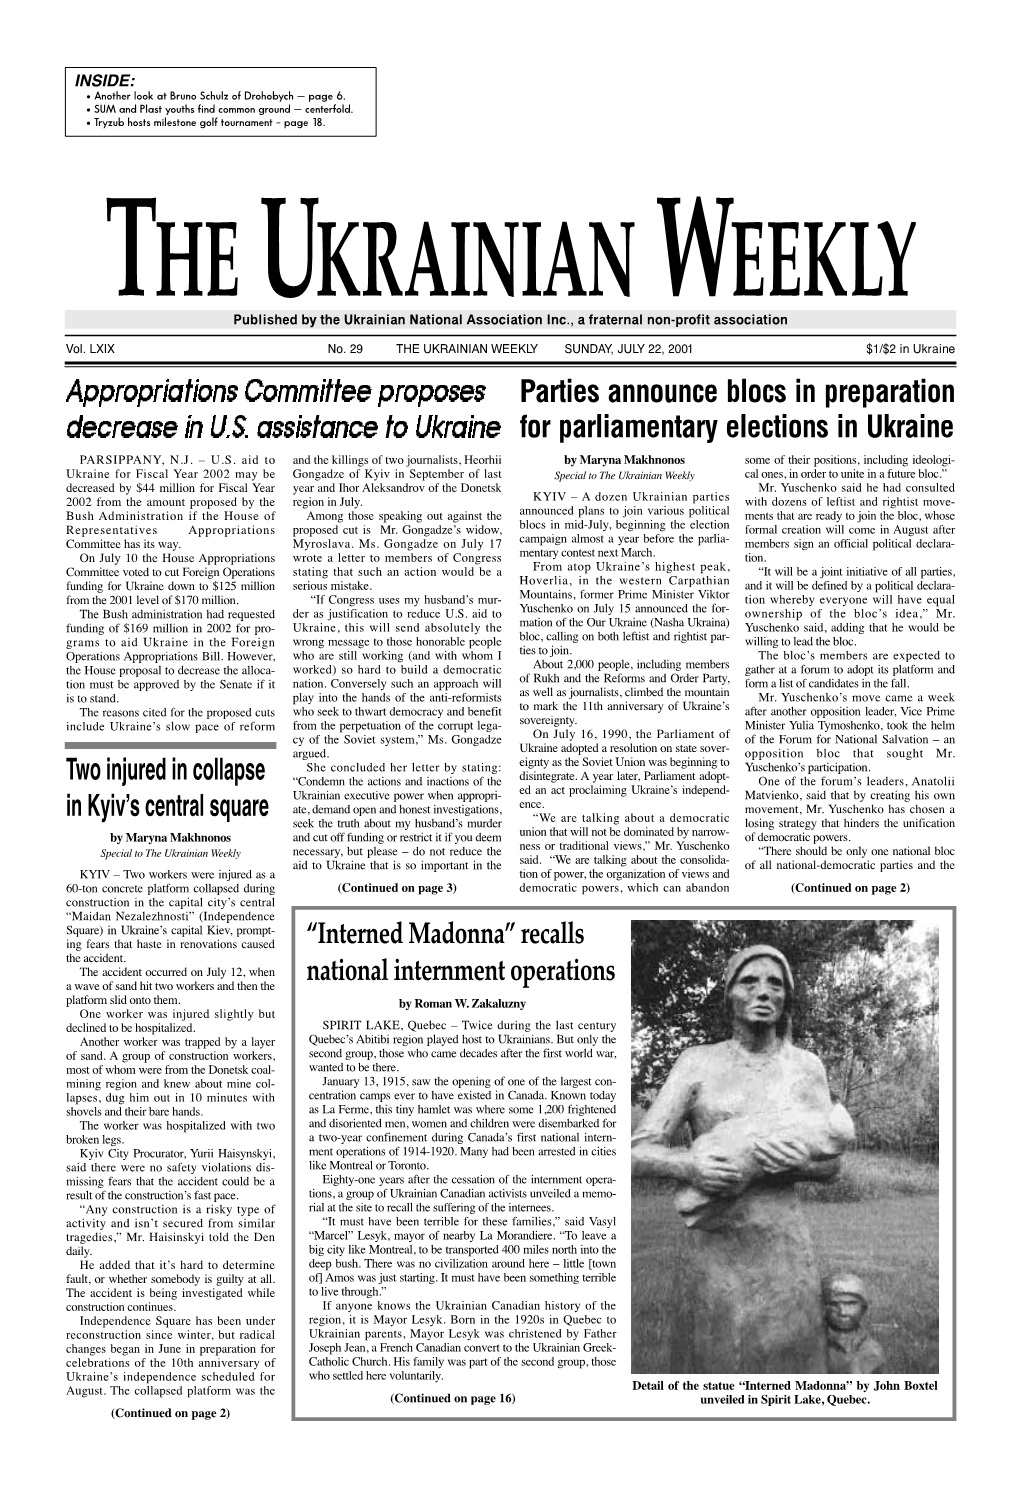 The Ukrainian Weekly 2001, No.29